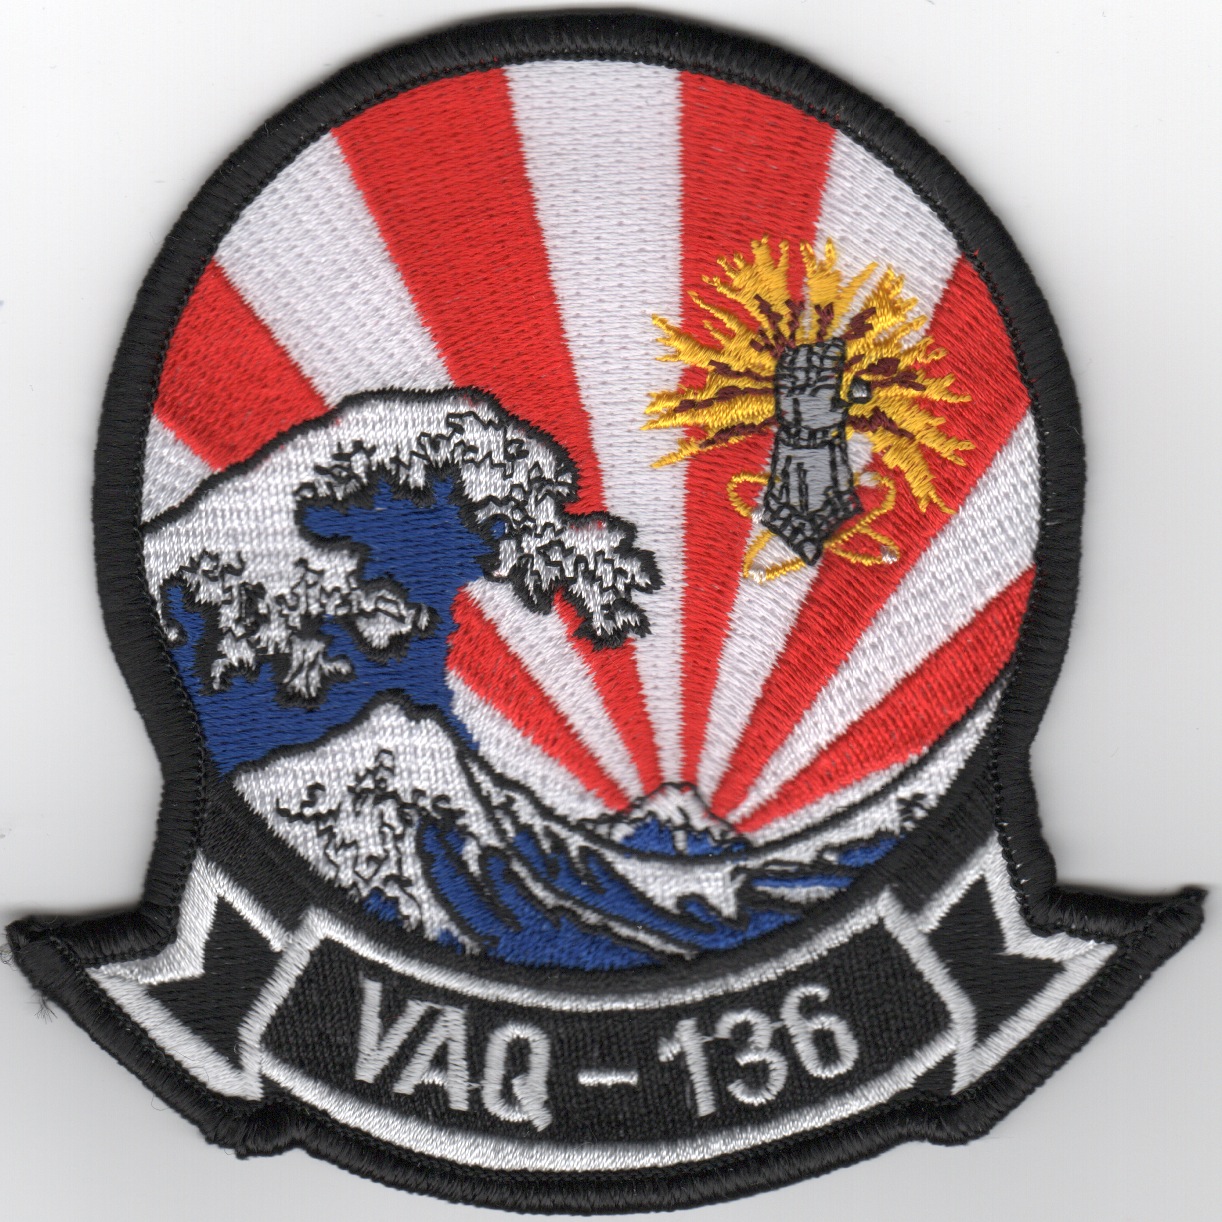 VAQ-136 Squadron Patch (Tidal Wave)